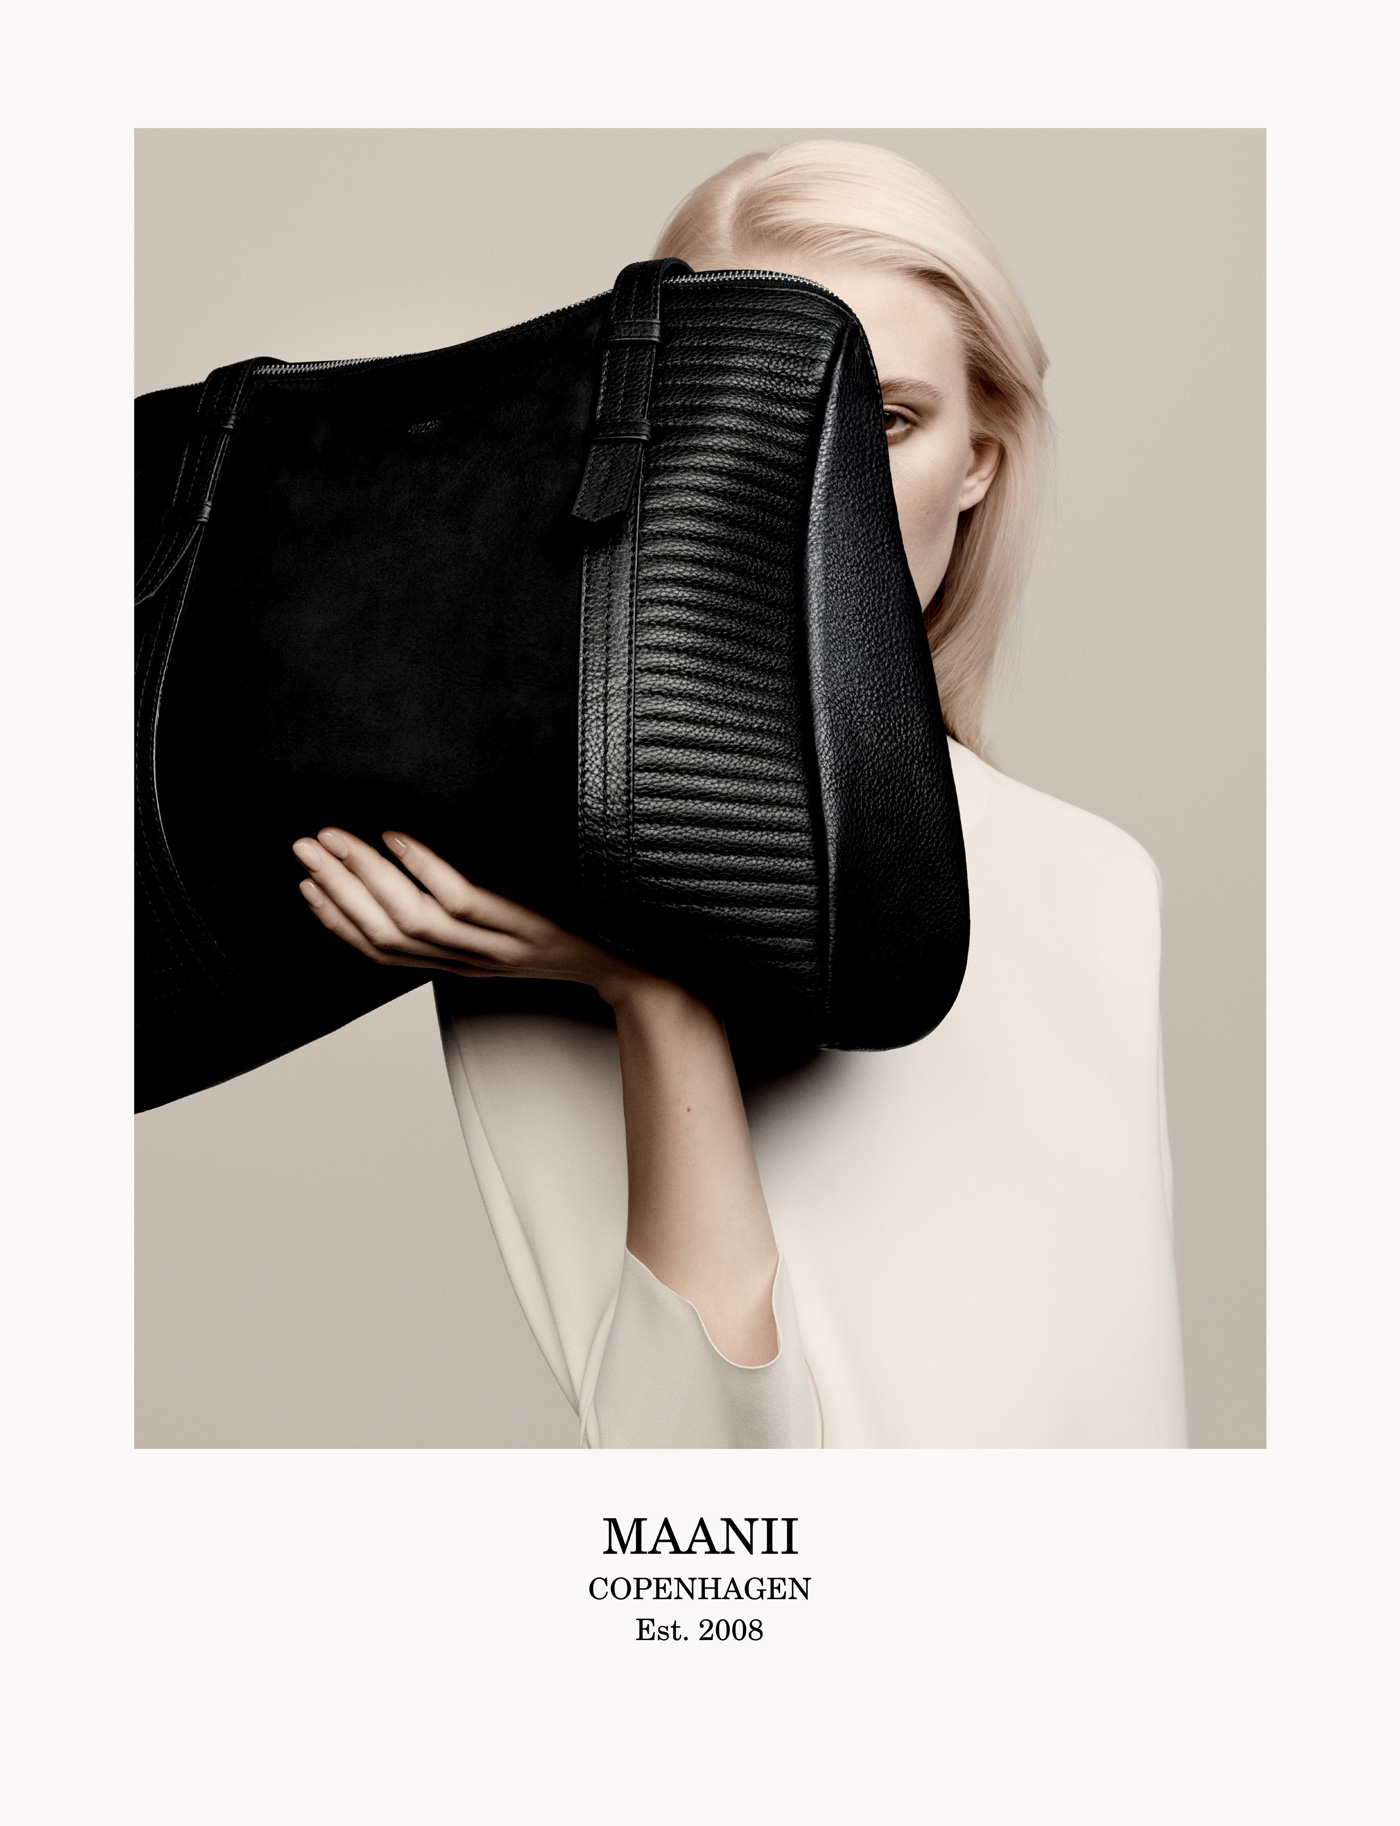 Maanii – Image campaign Winter 2014